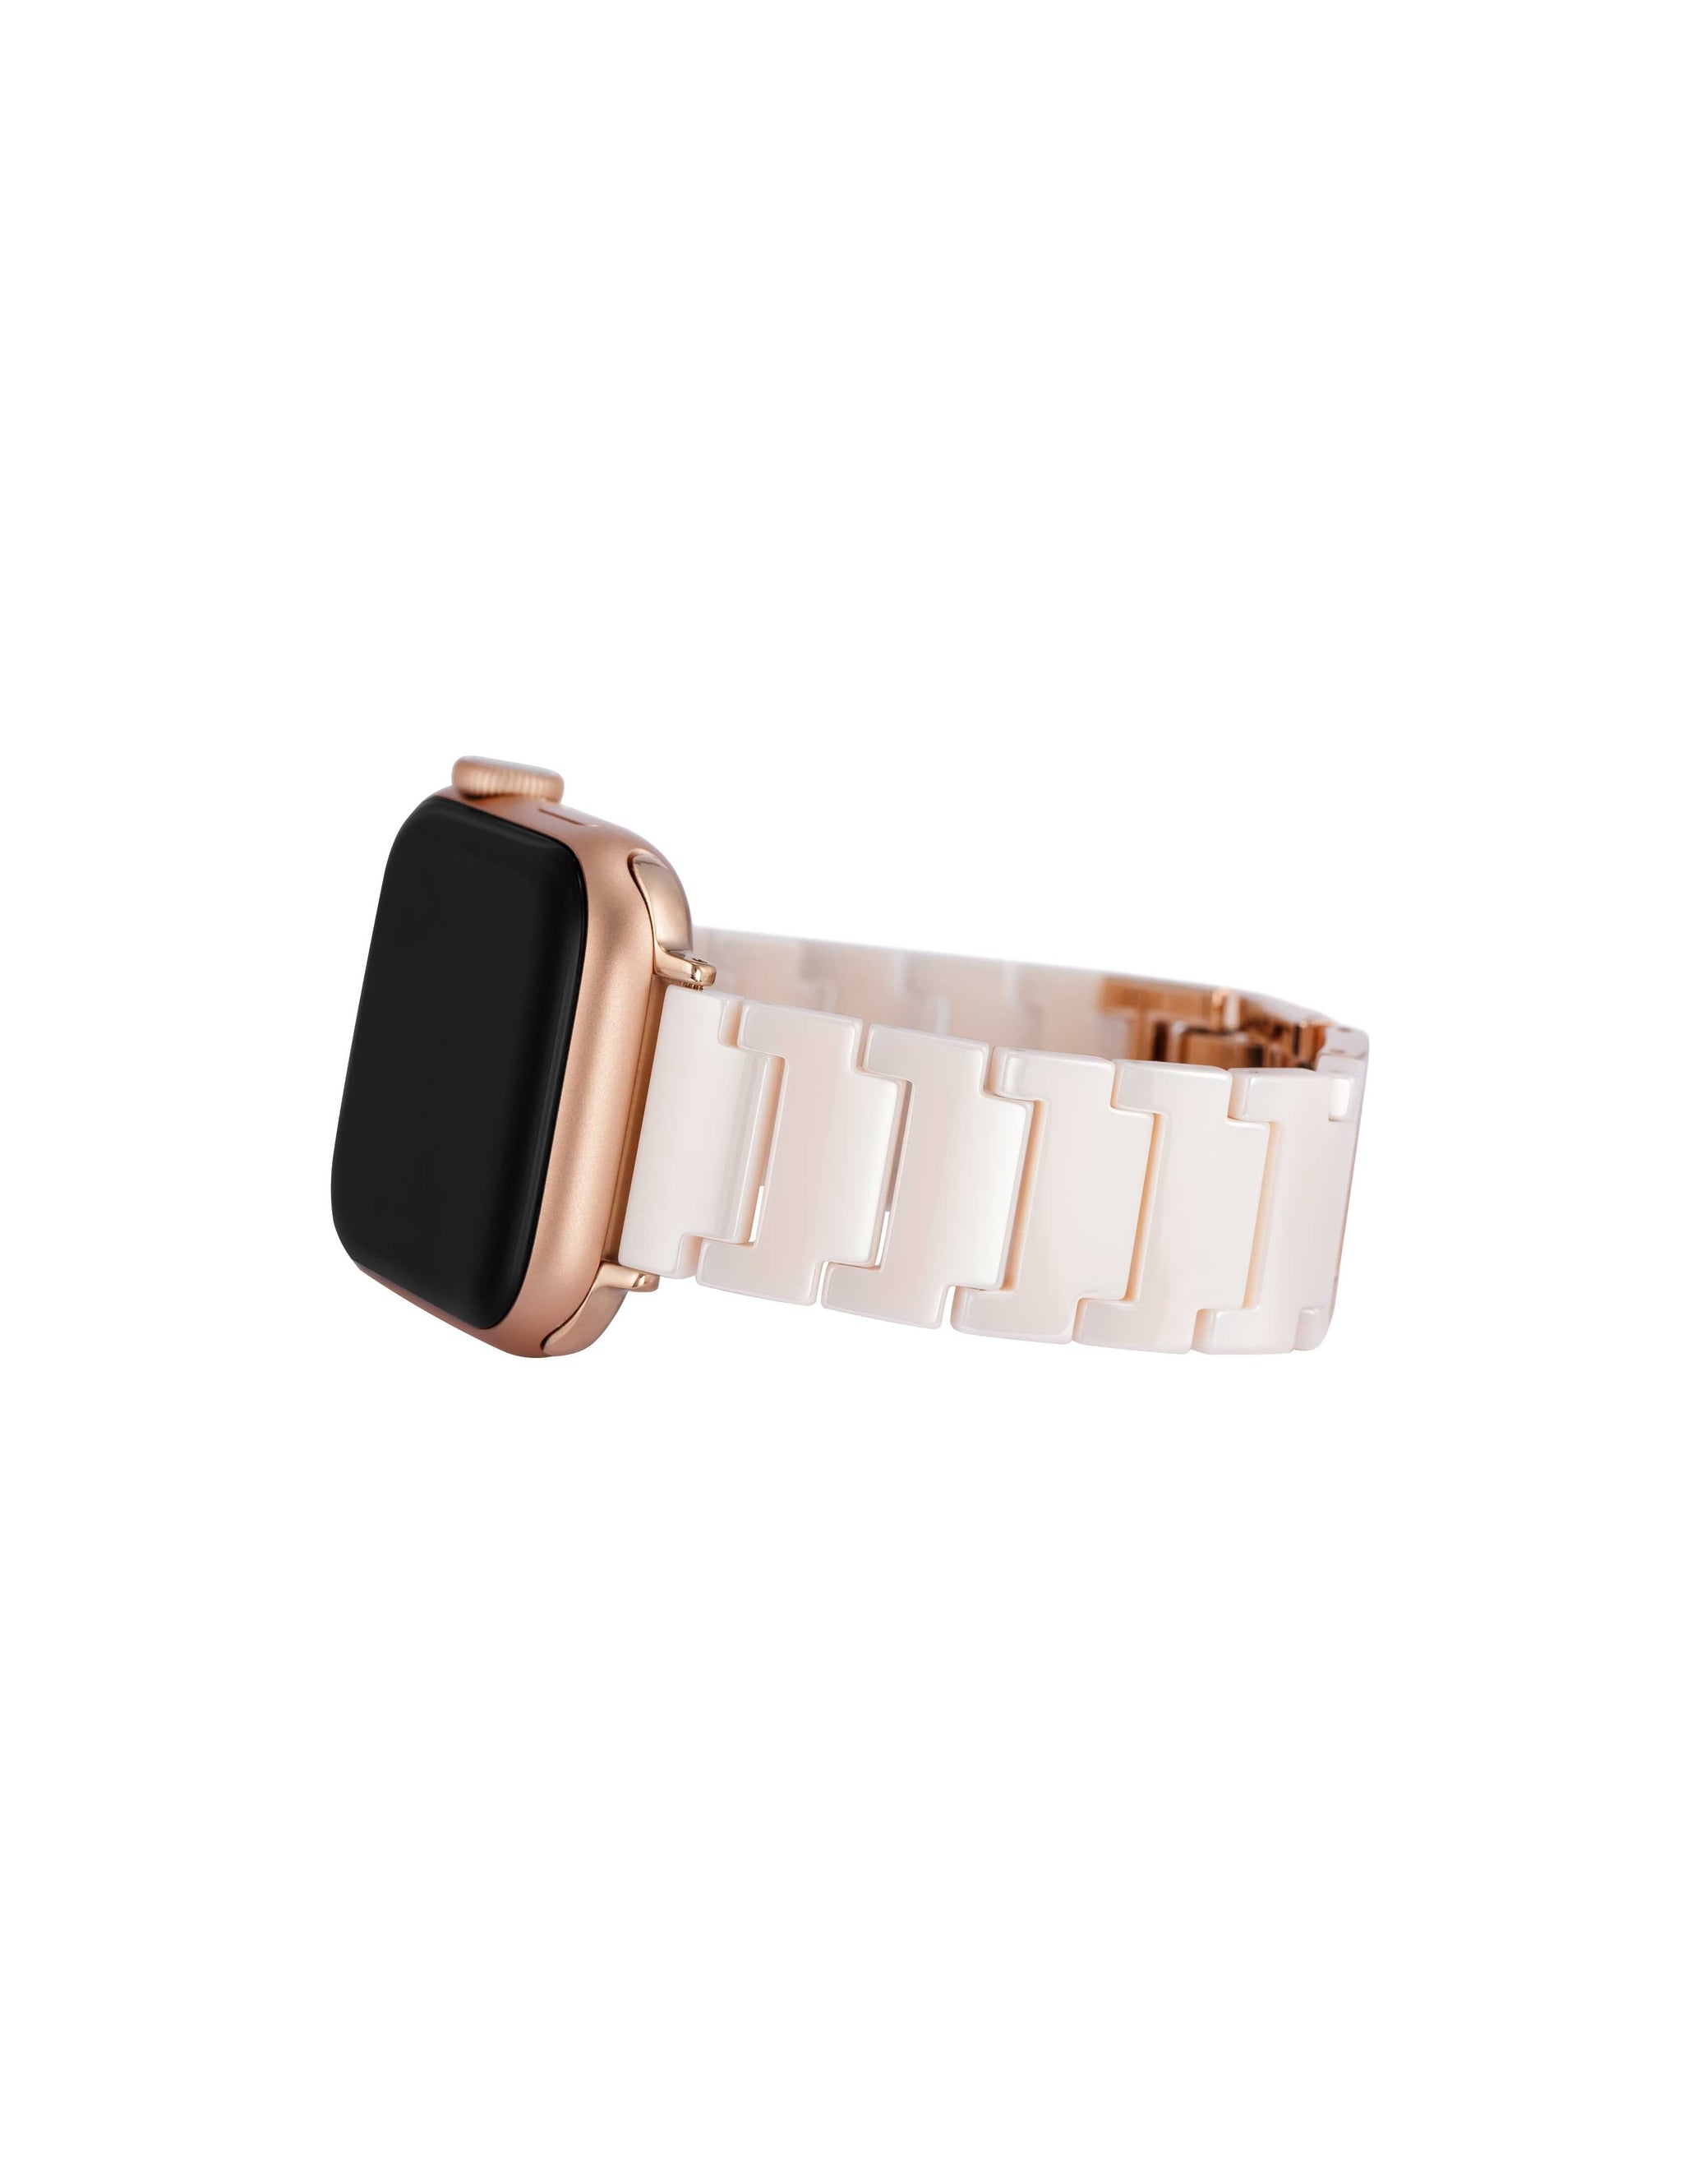 Ceramic Bracelet Band for Apple Watch¨ Black/Rose Gold-Tone | Anne Klein